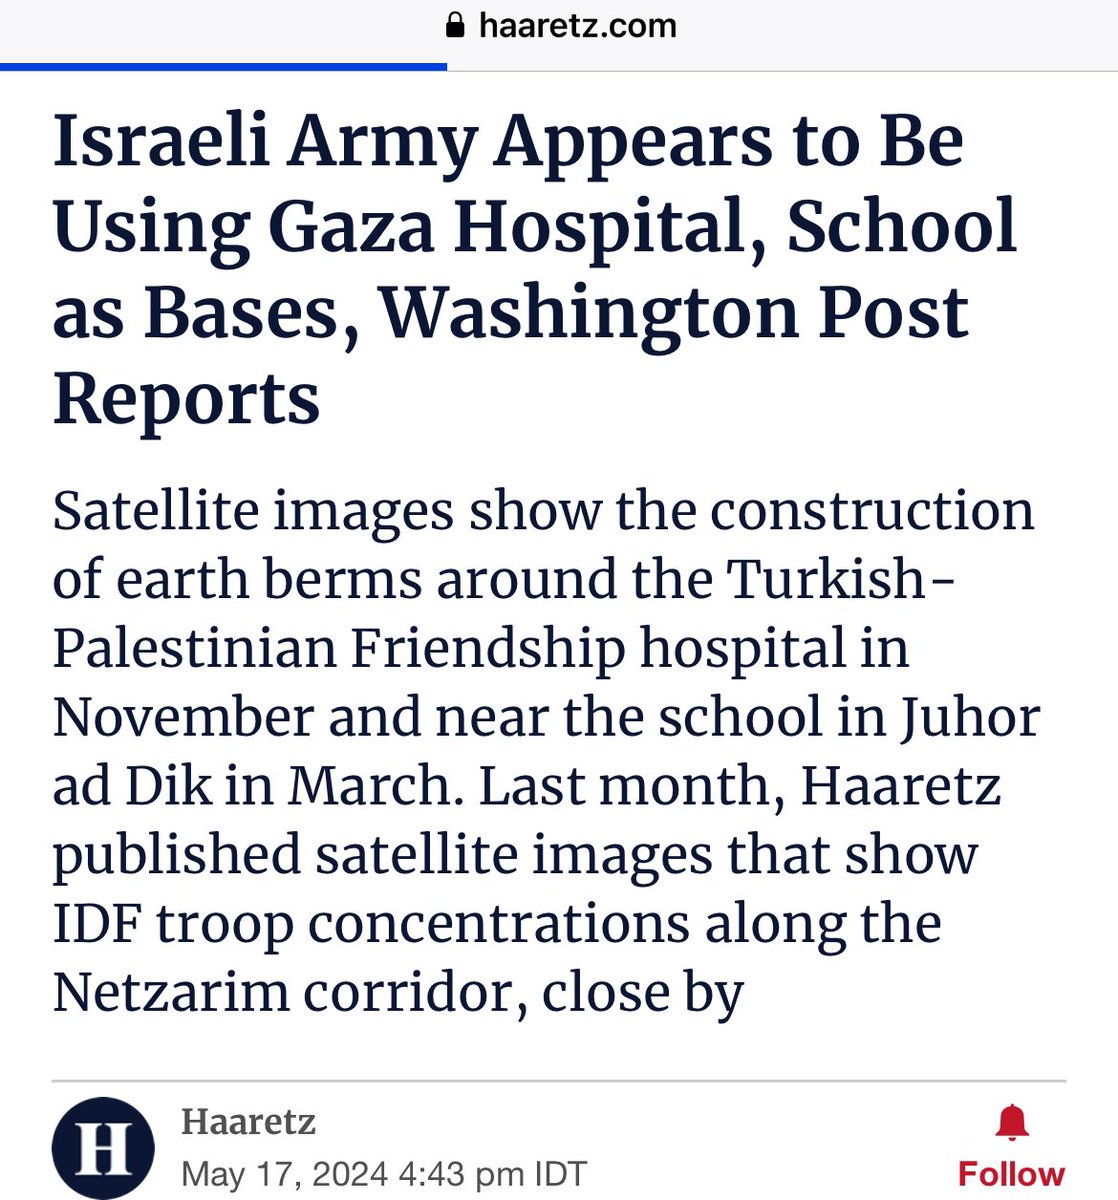 'Hamas used school as base”
they said.
'Hamas used human shield' they said.
“Hamas beheaded children” they said
“Hamas killed aid workers” they said 

 The reality is: